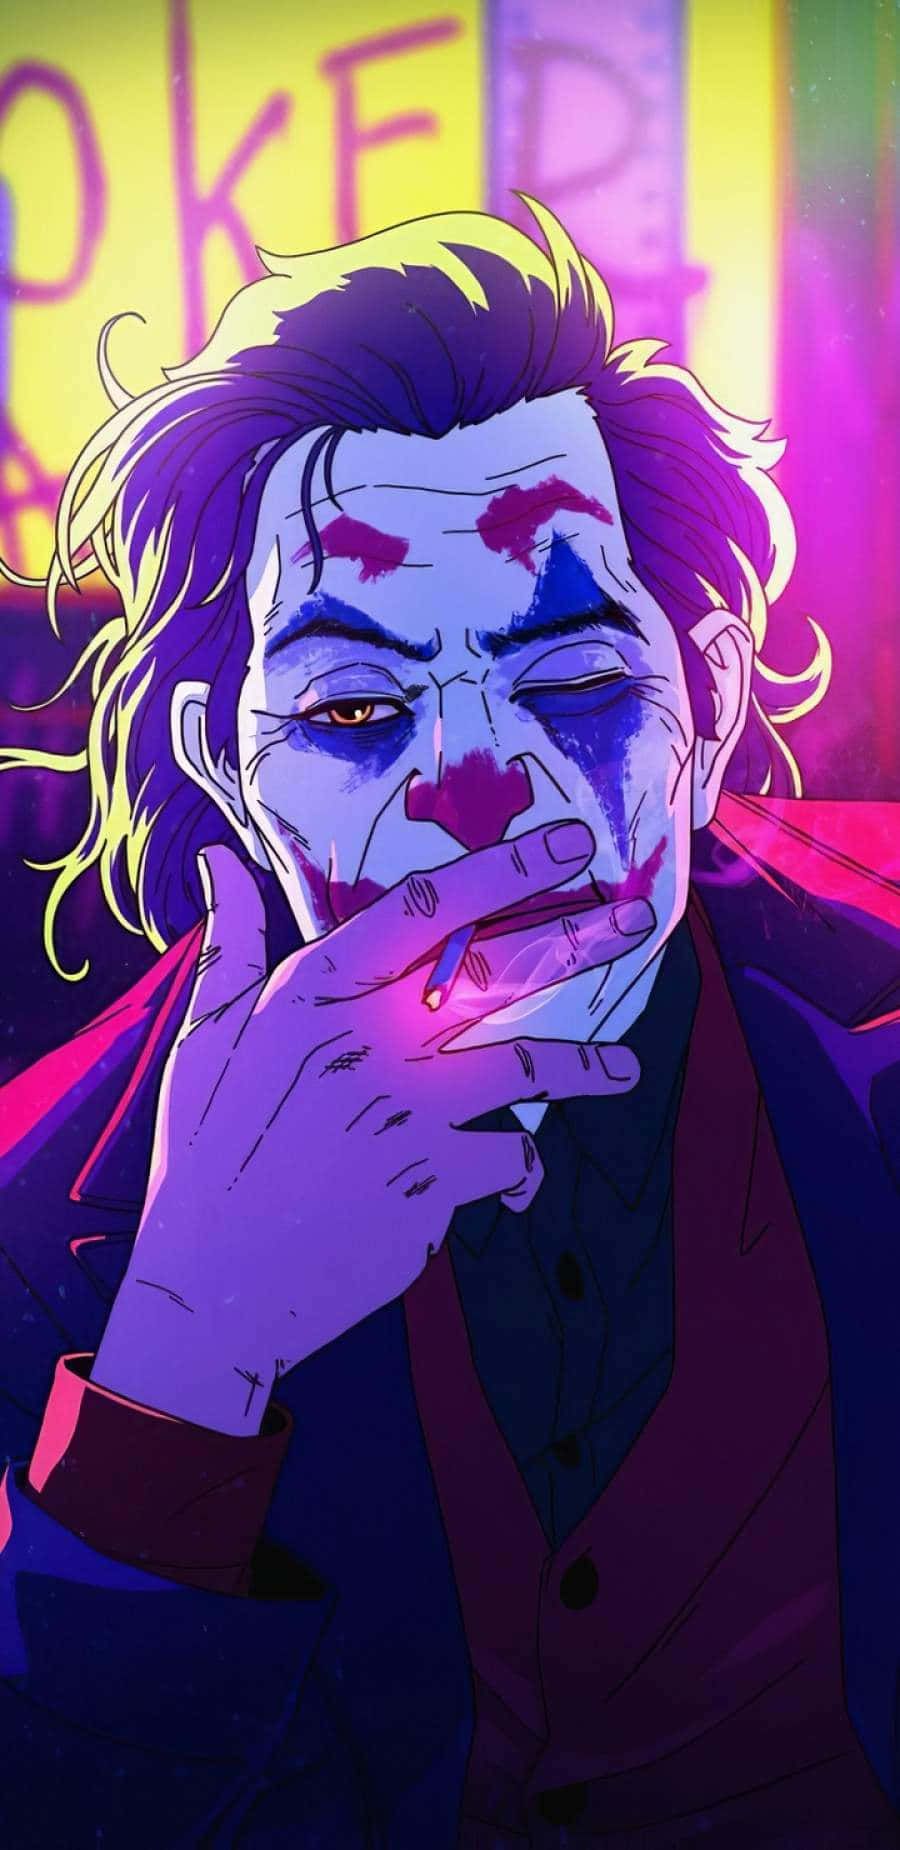  Joker Hintergrundbild 900x1850. Download Get into the mind of the Joker Wallpaper